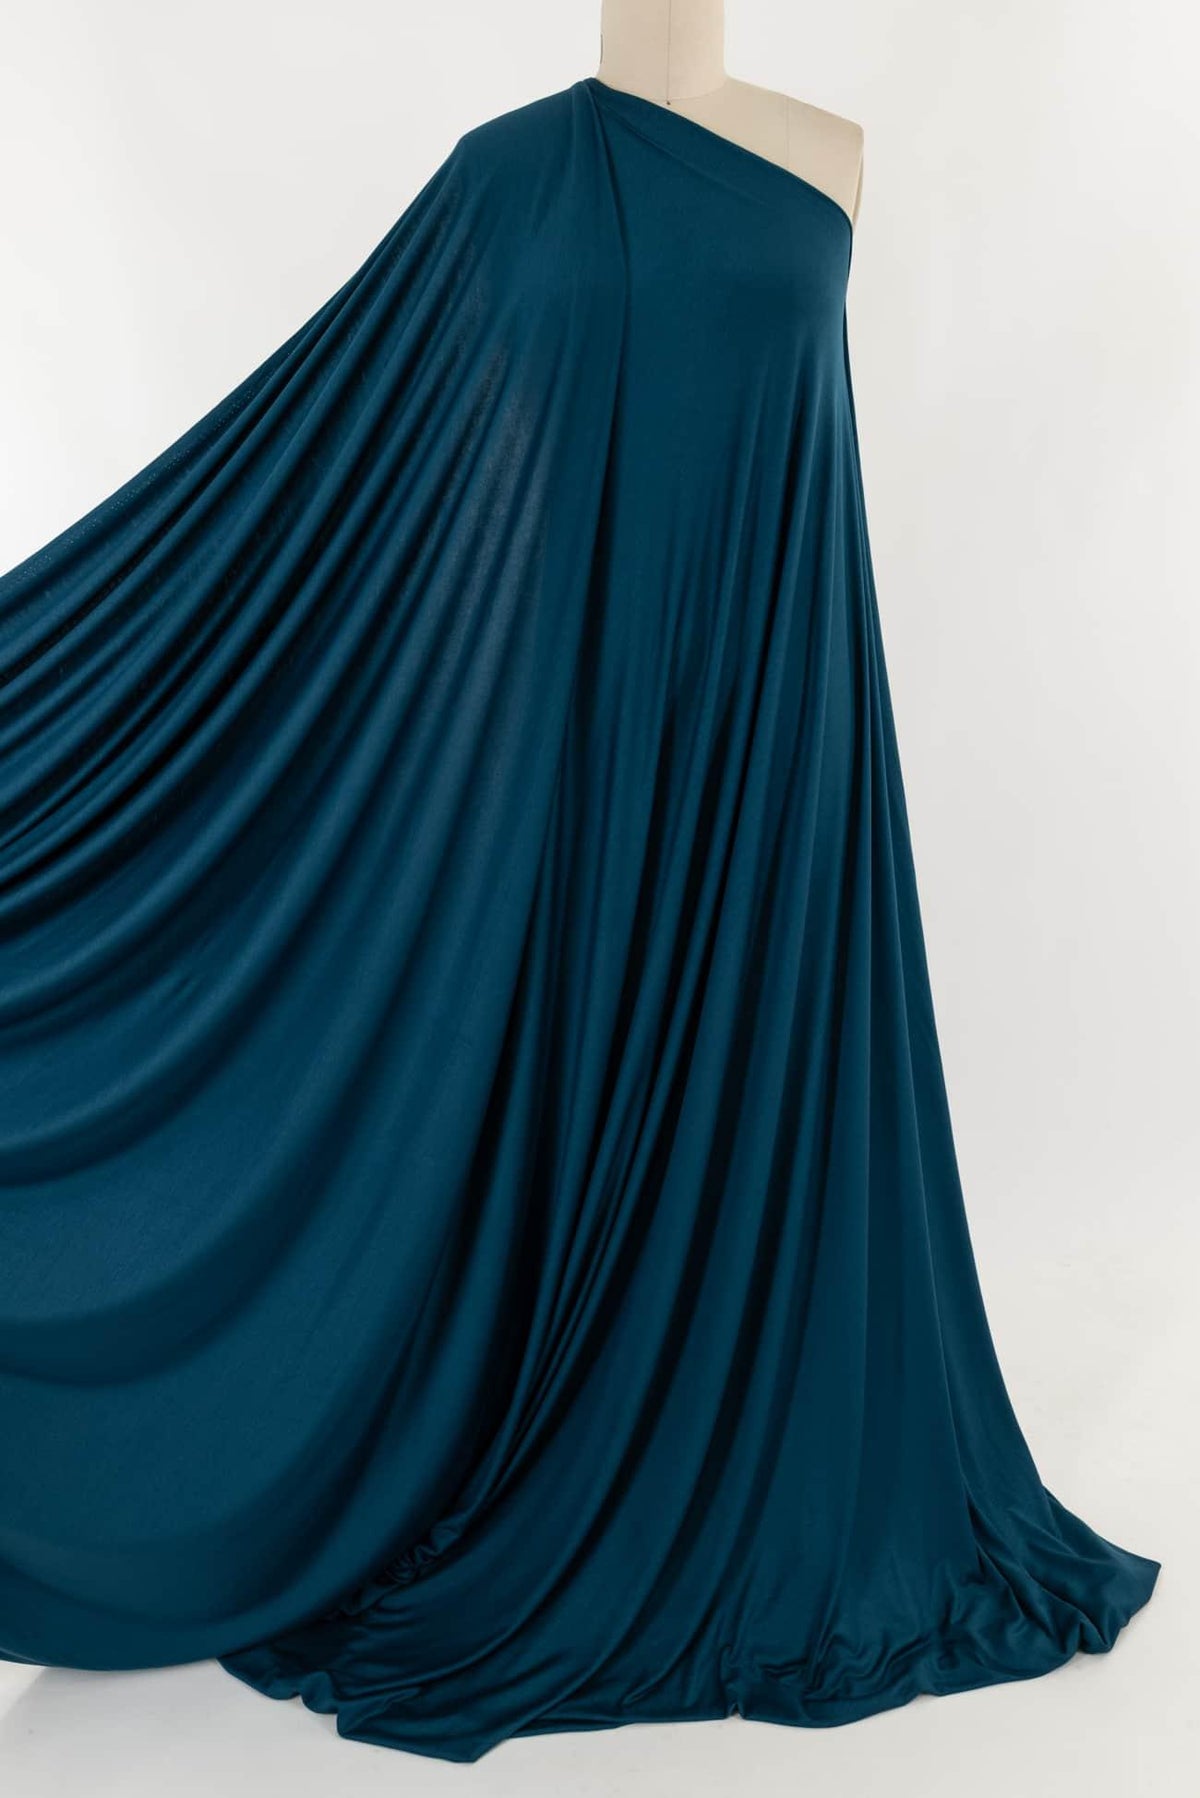 Sedona Turquoise Knit - Marcy Tilton Fabrics